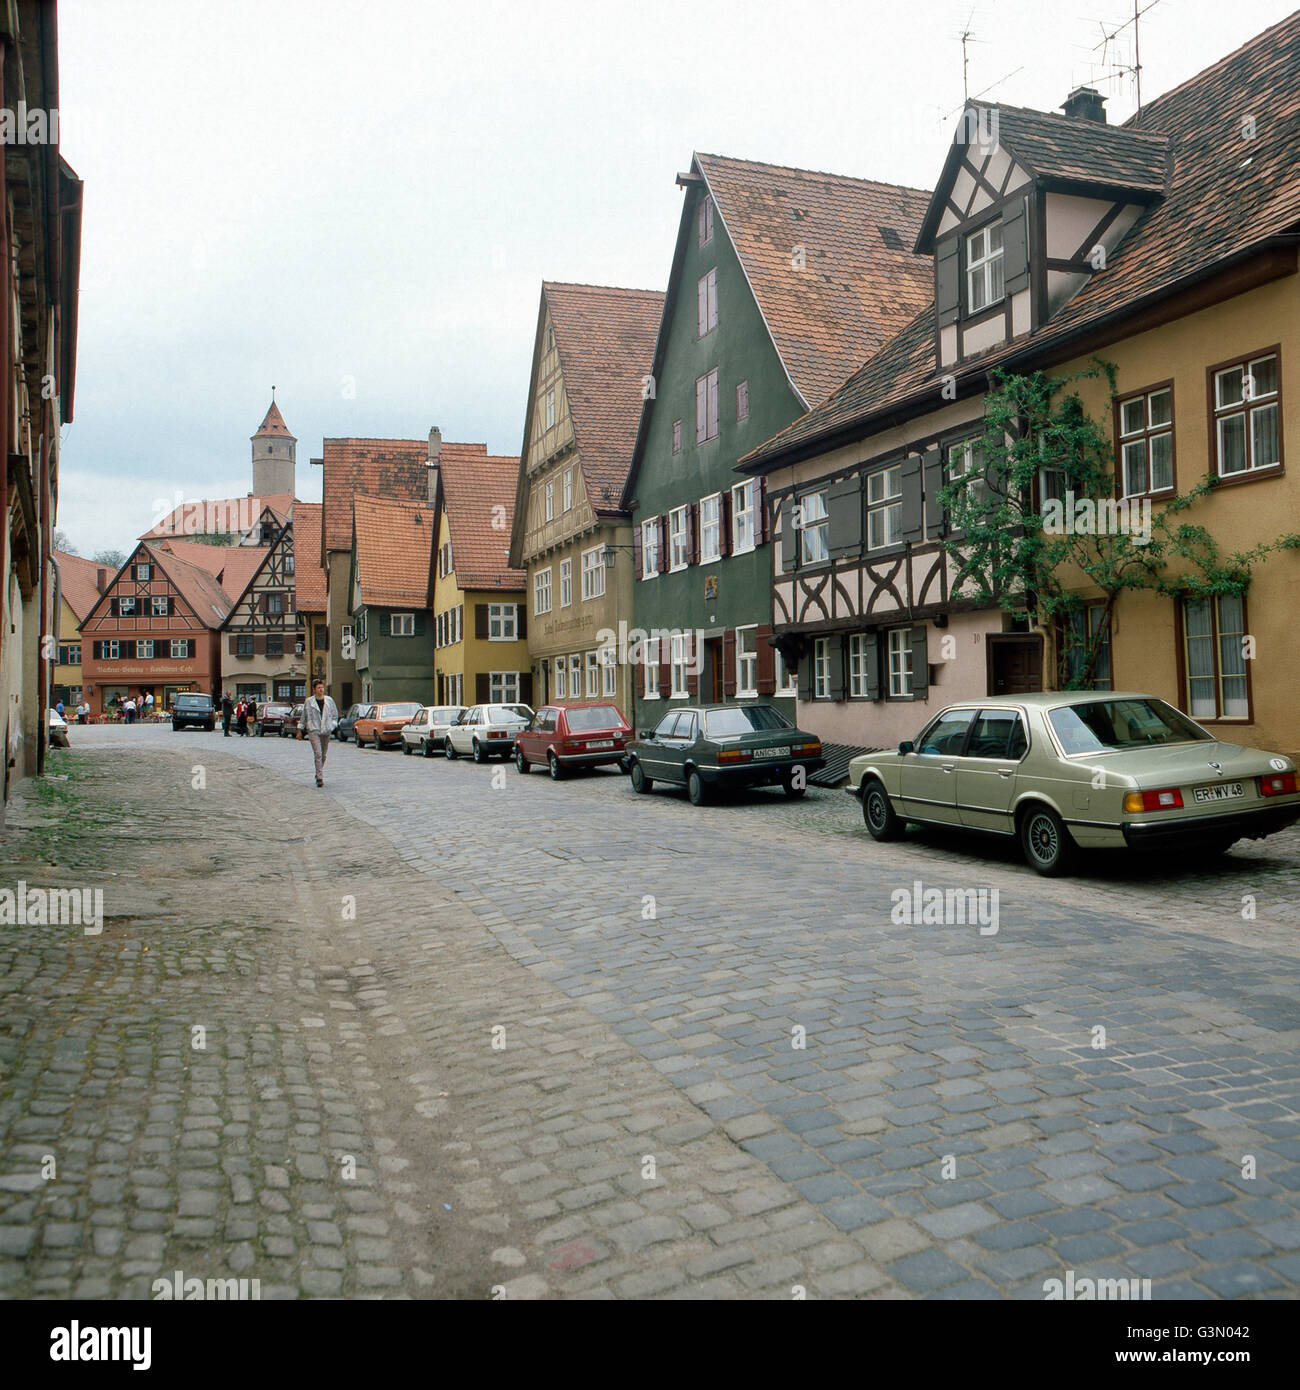 Reise durch Franken, Deutschland 1980er Jahre. Viaggio attraverso la Franconia, Germania degli anni ottanta. Foto Stock